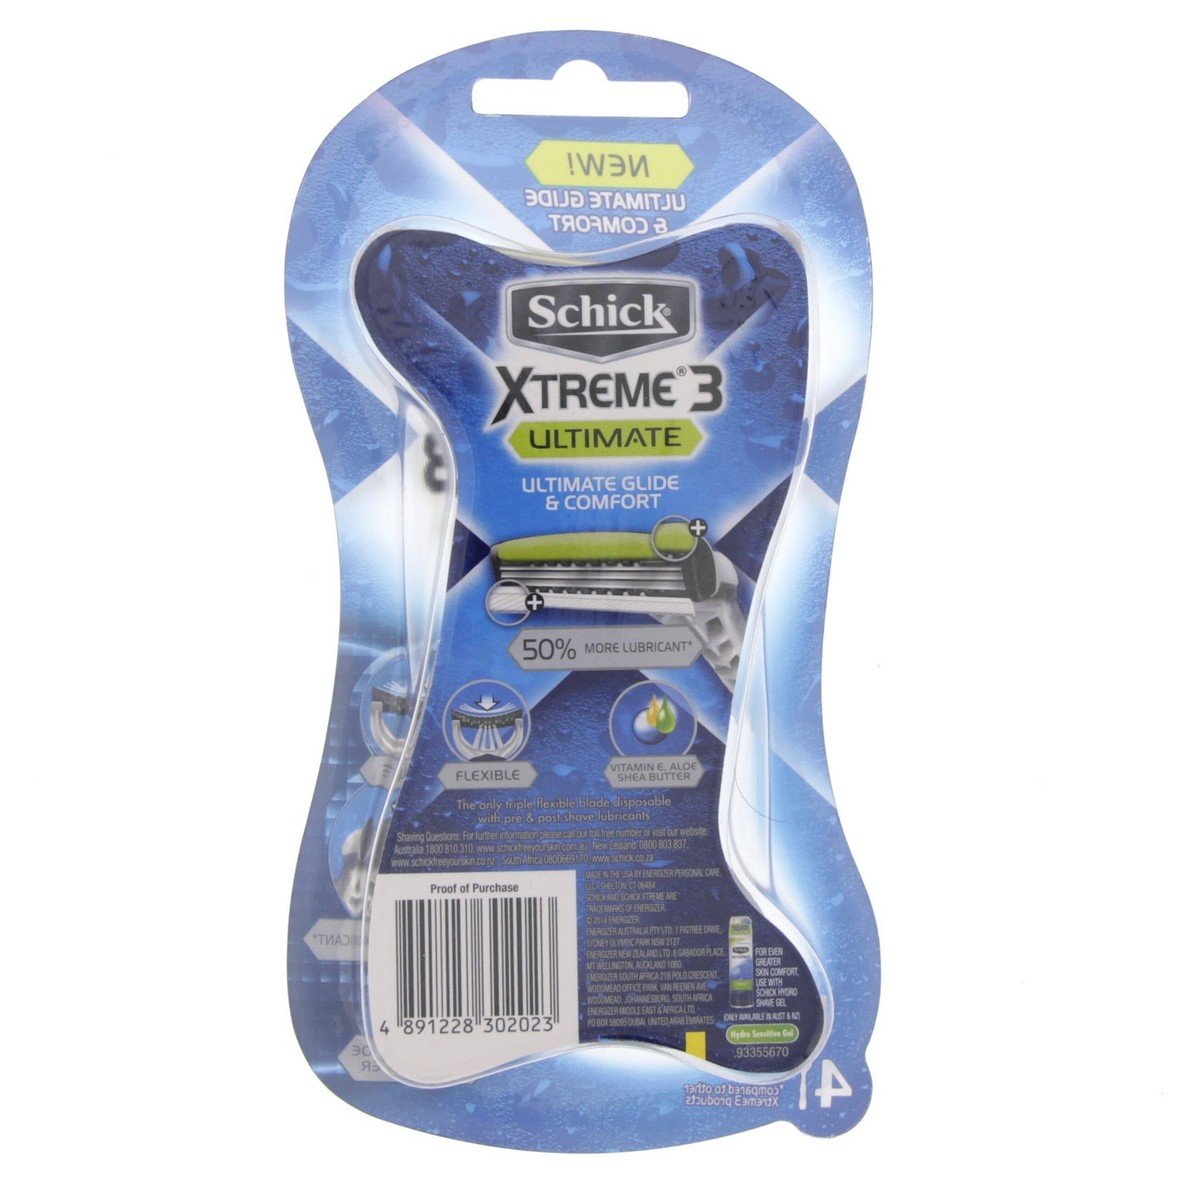 Schick Xtreme 3 Ultimate Razor for Men 4 pcs